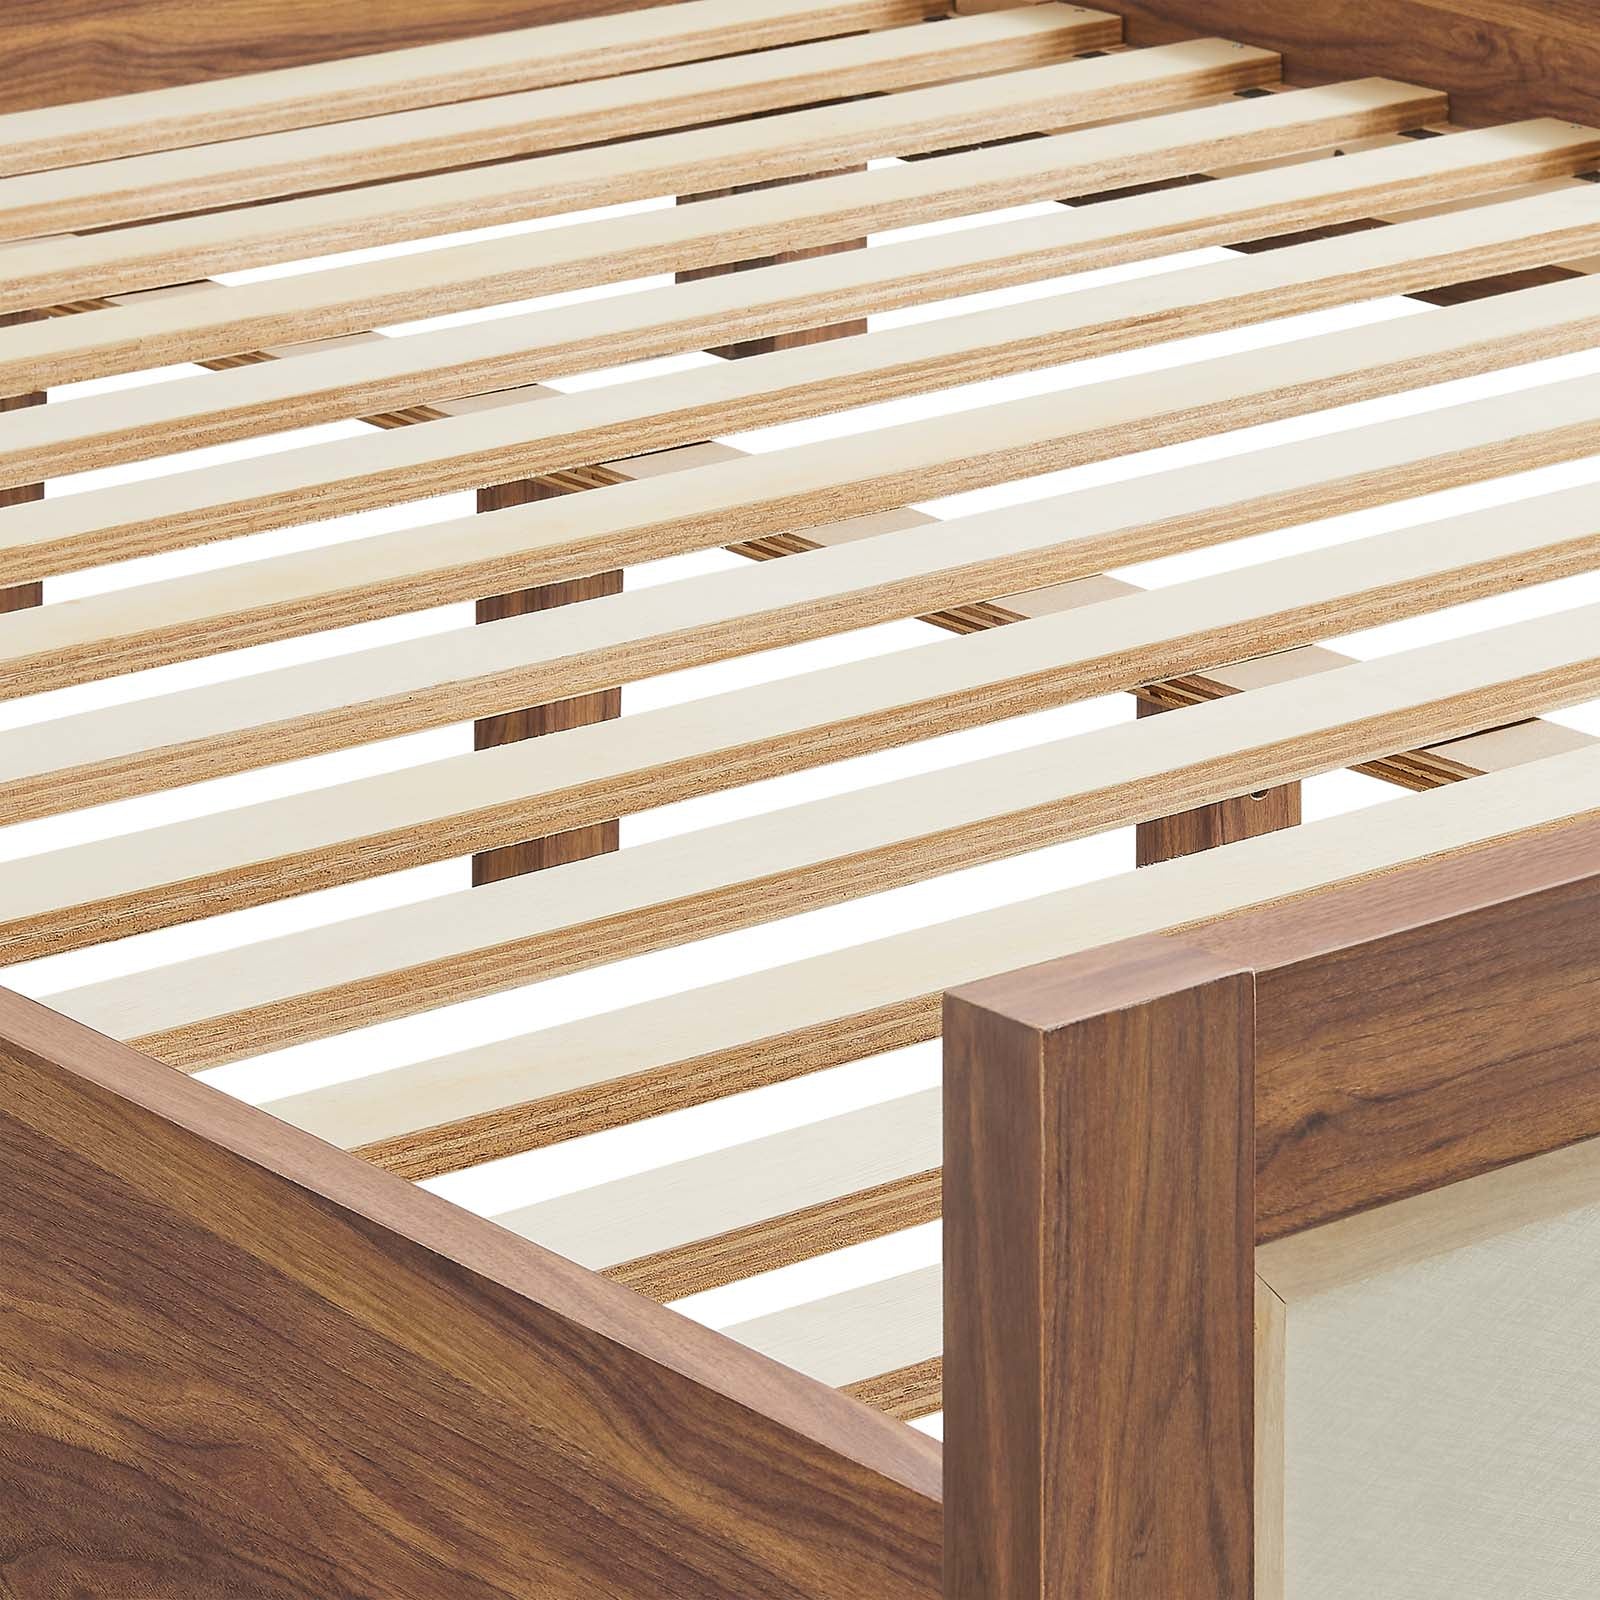 Capri Wood Grain Platform Bed-Bed-Modway-Wall2Wall Furnishings